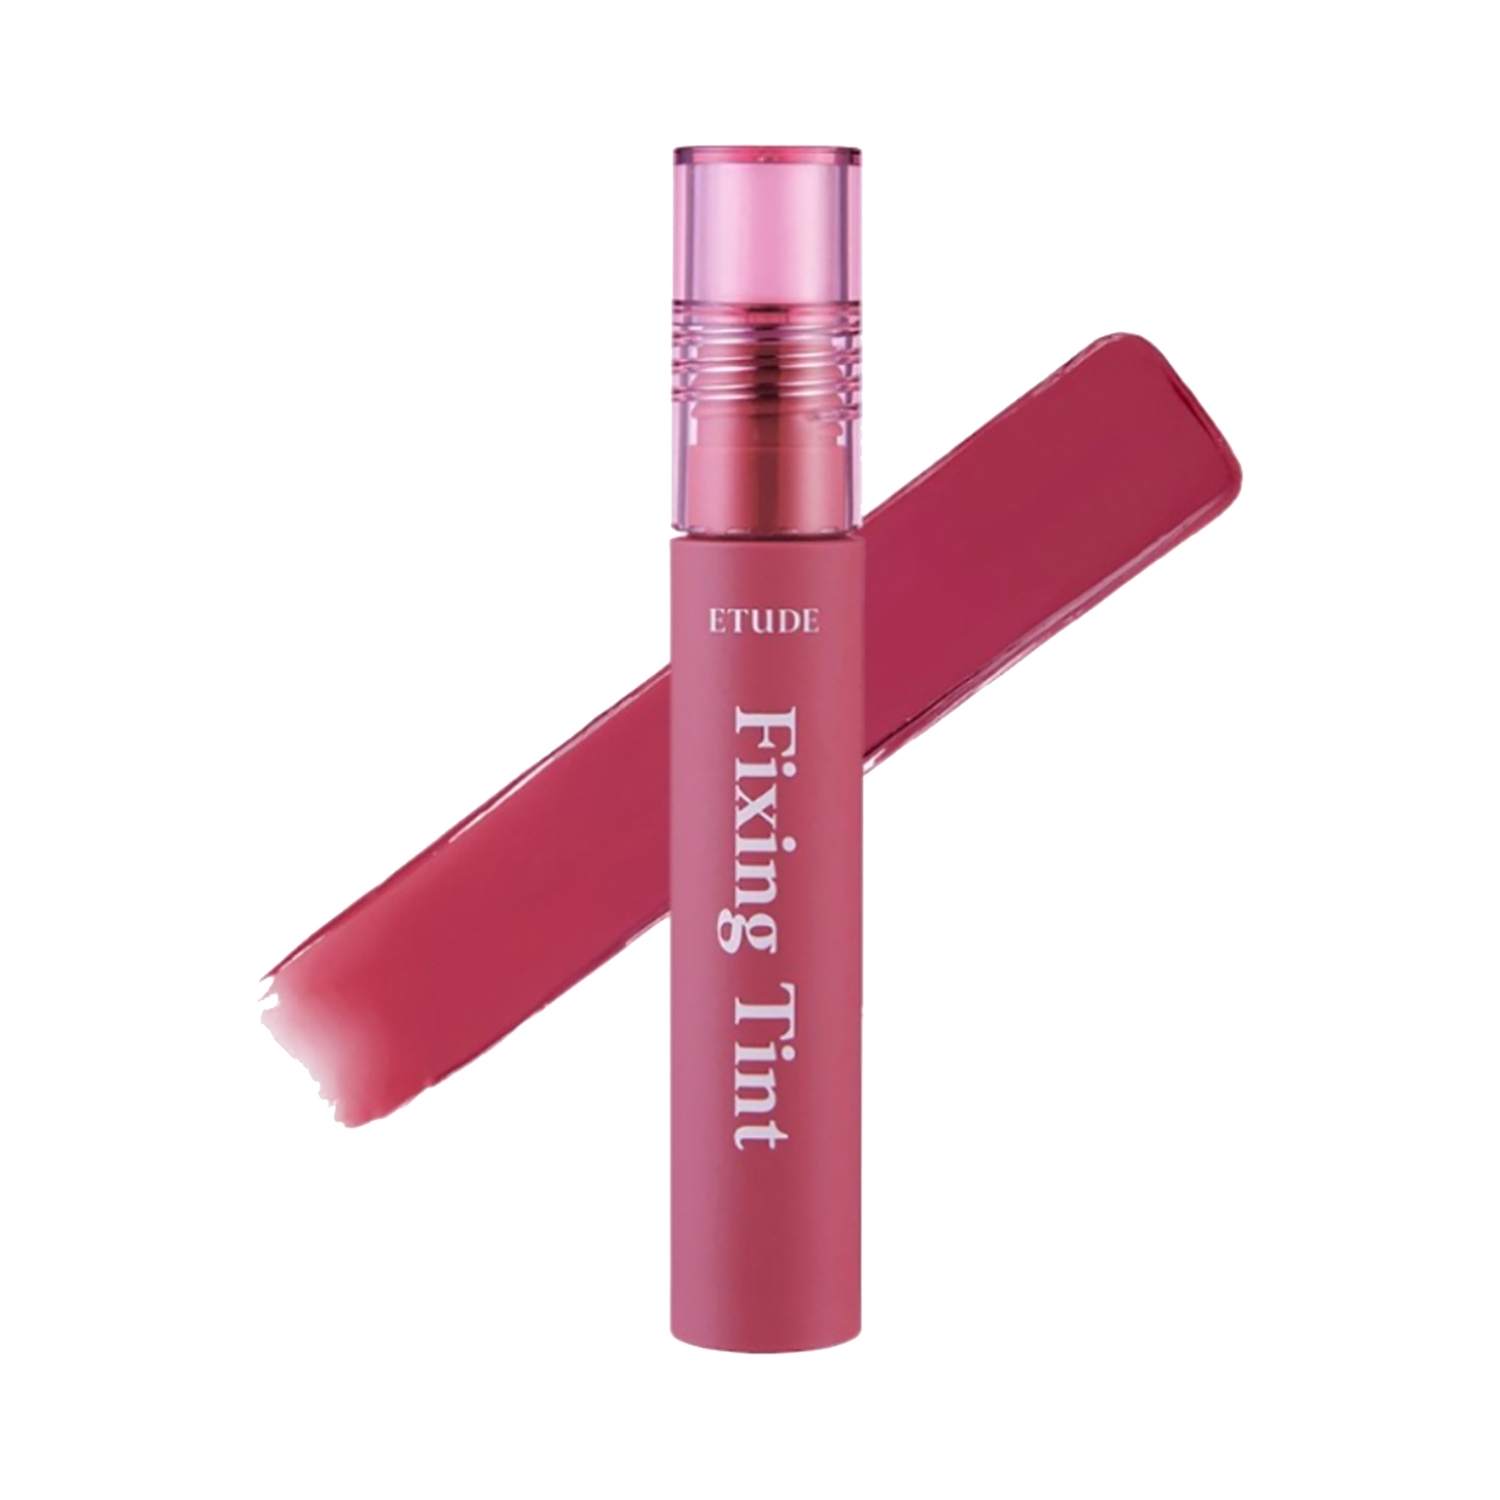 ETUDE HOUSE | ETUDE HOUSE Fixing Tint Lipstick #11 - Rose Blending (4 g)